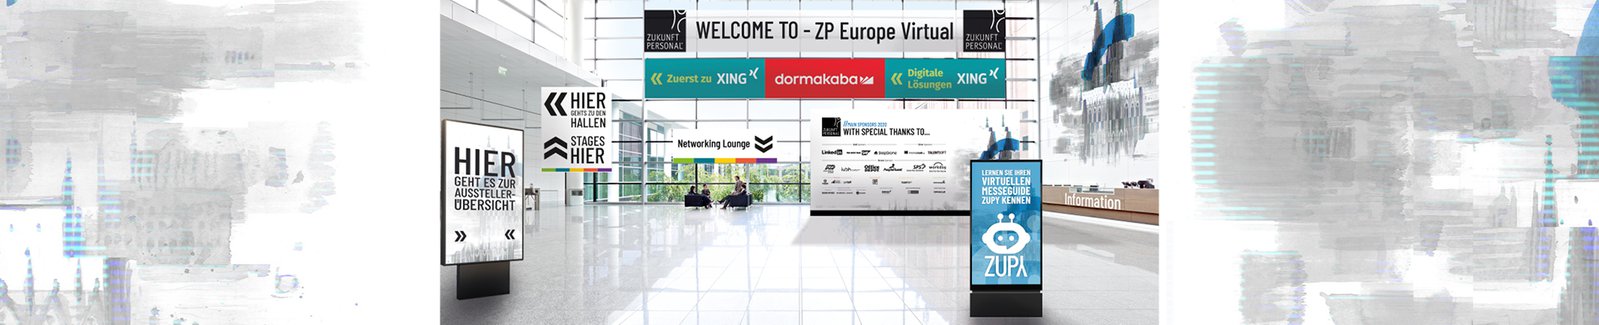 Zukunft Personal Europe 2020 Virtual